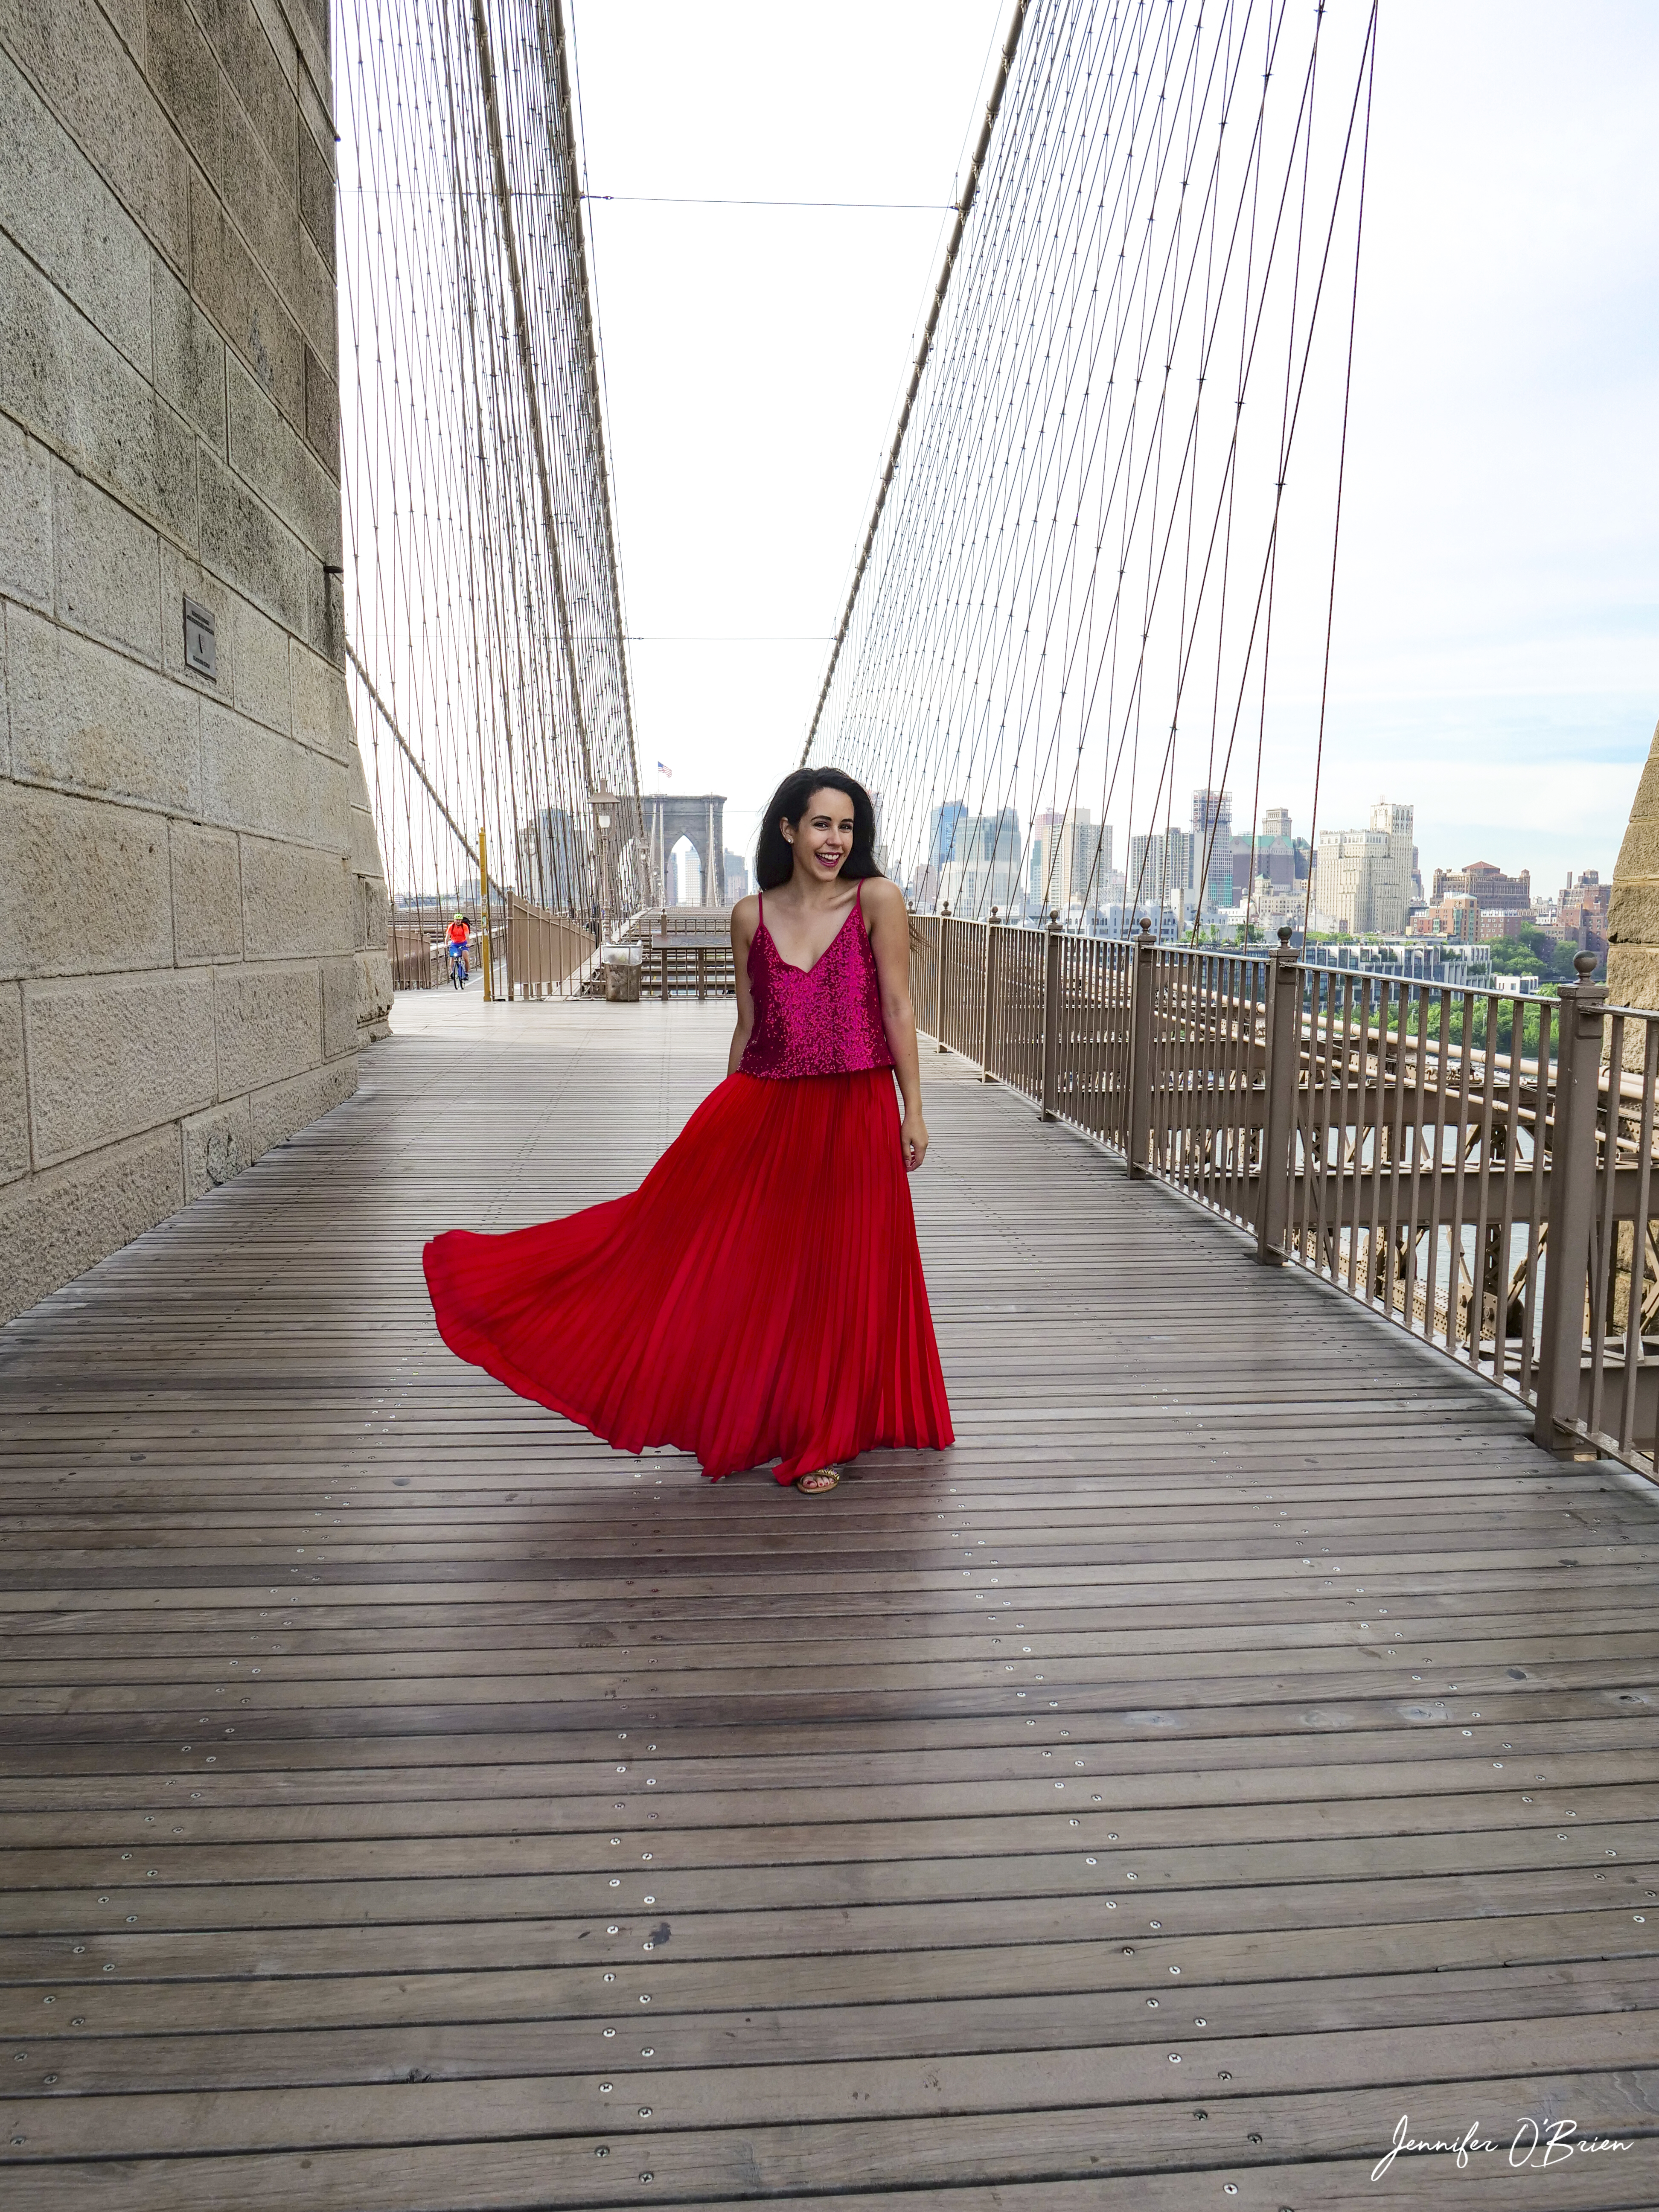 Top Instagram Photos of the Brooklyn Bridge The Travel Women Tower